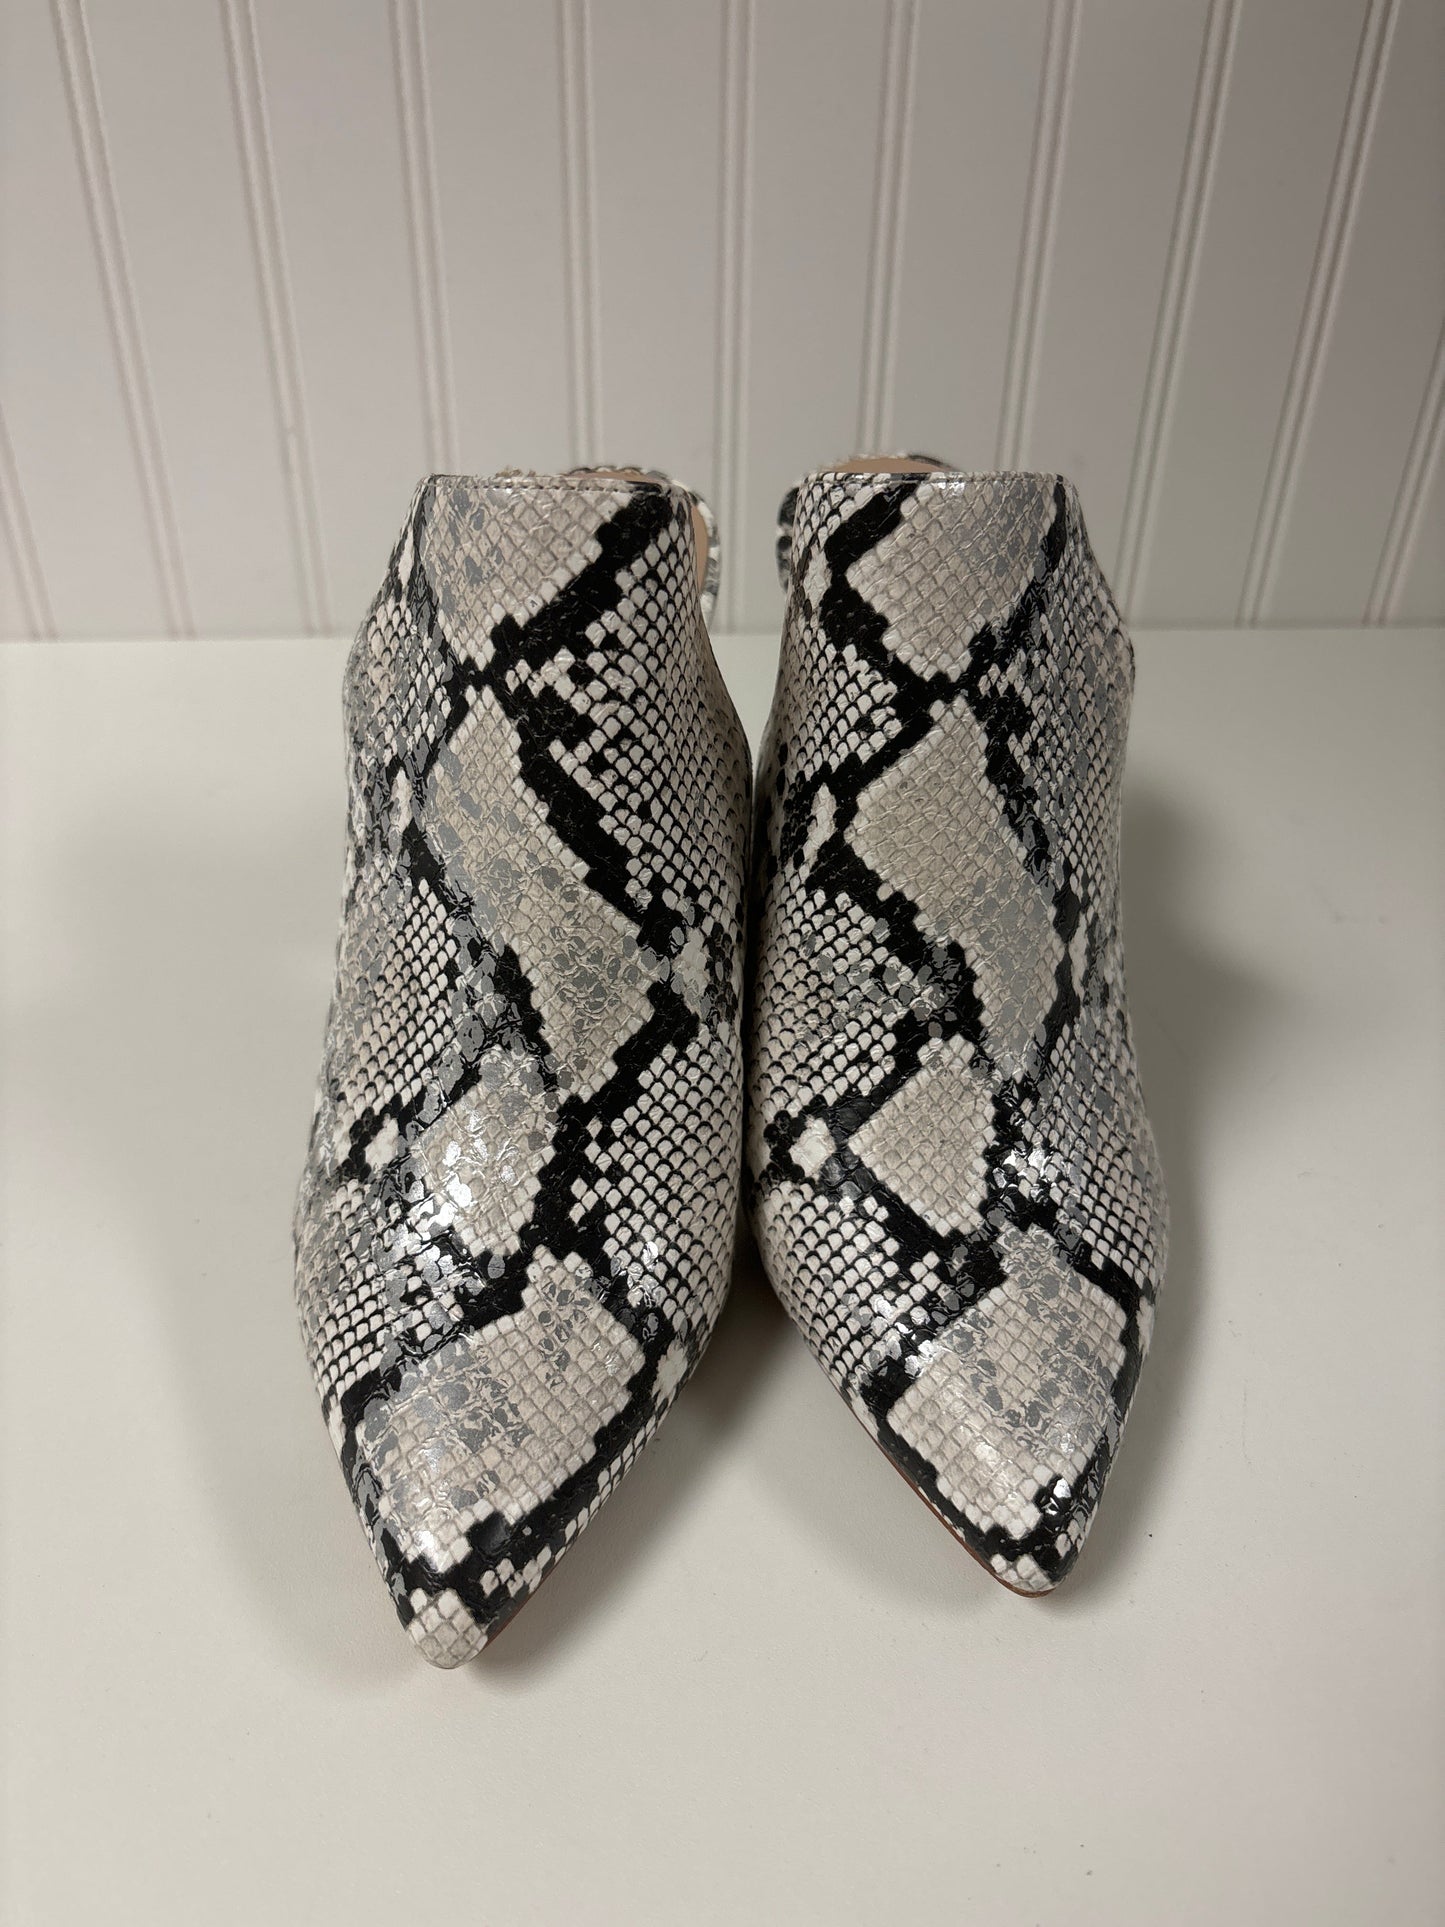 Snakeskin Print Shoes Heels Block Aldo, Size 8